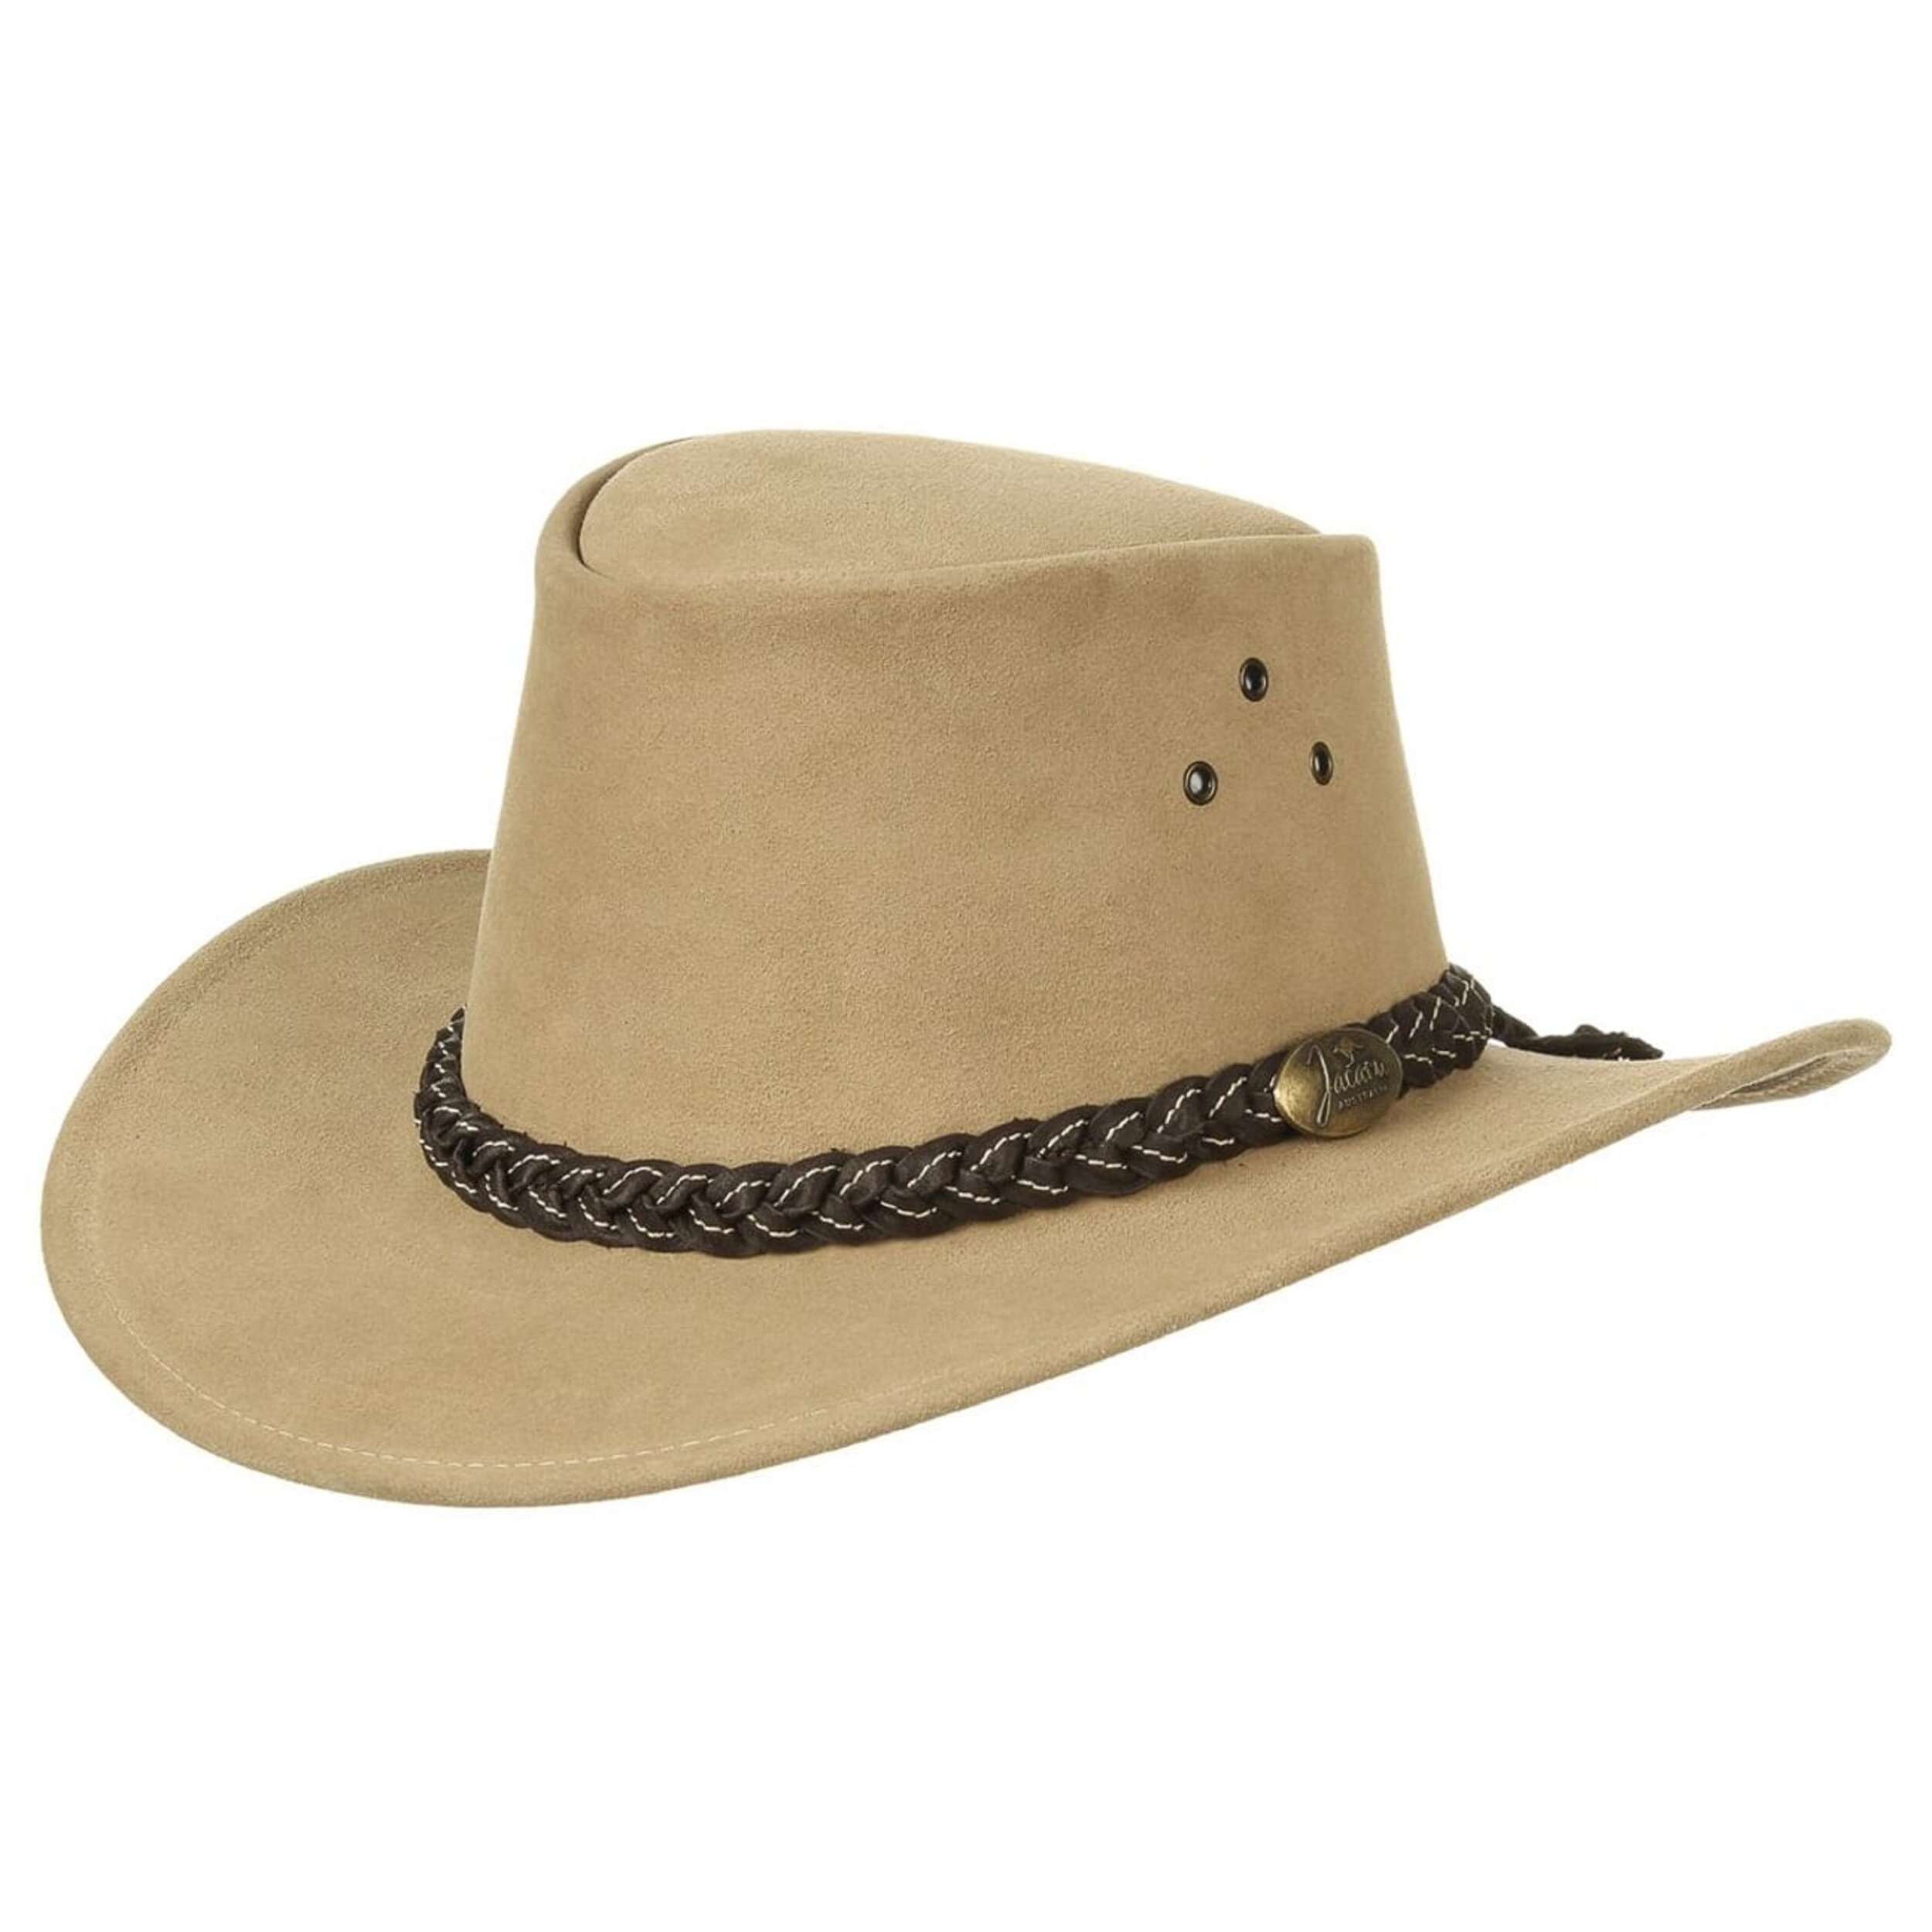 leather bushman hat